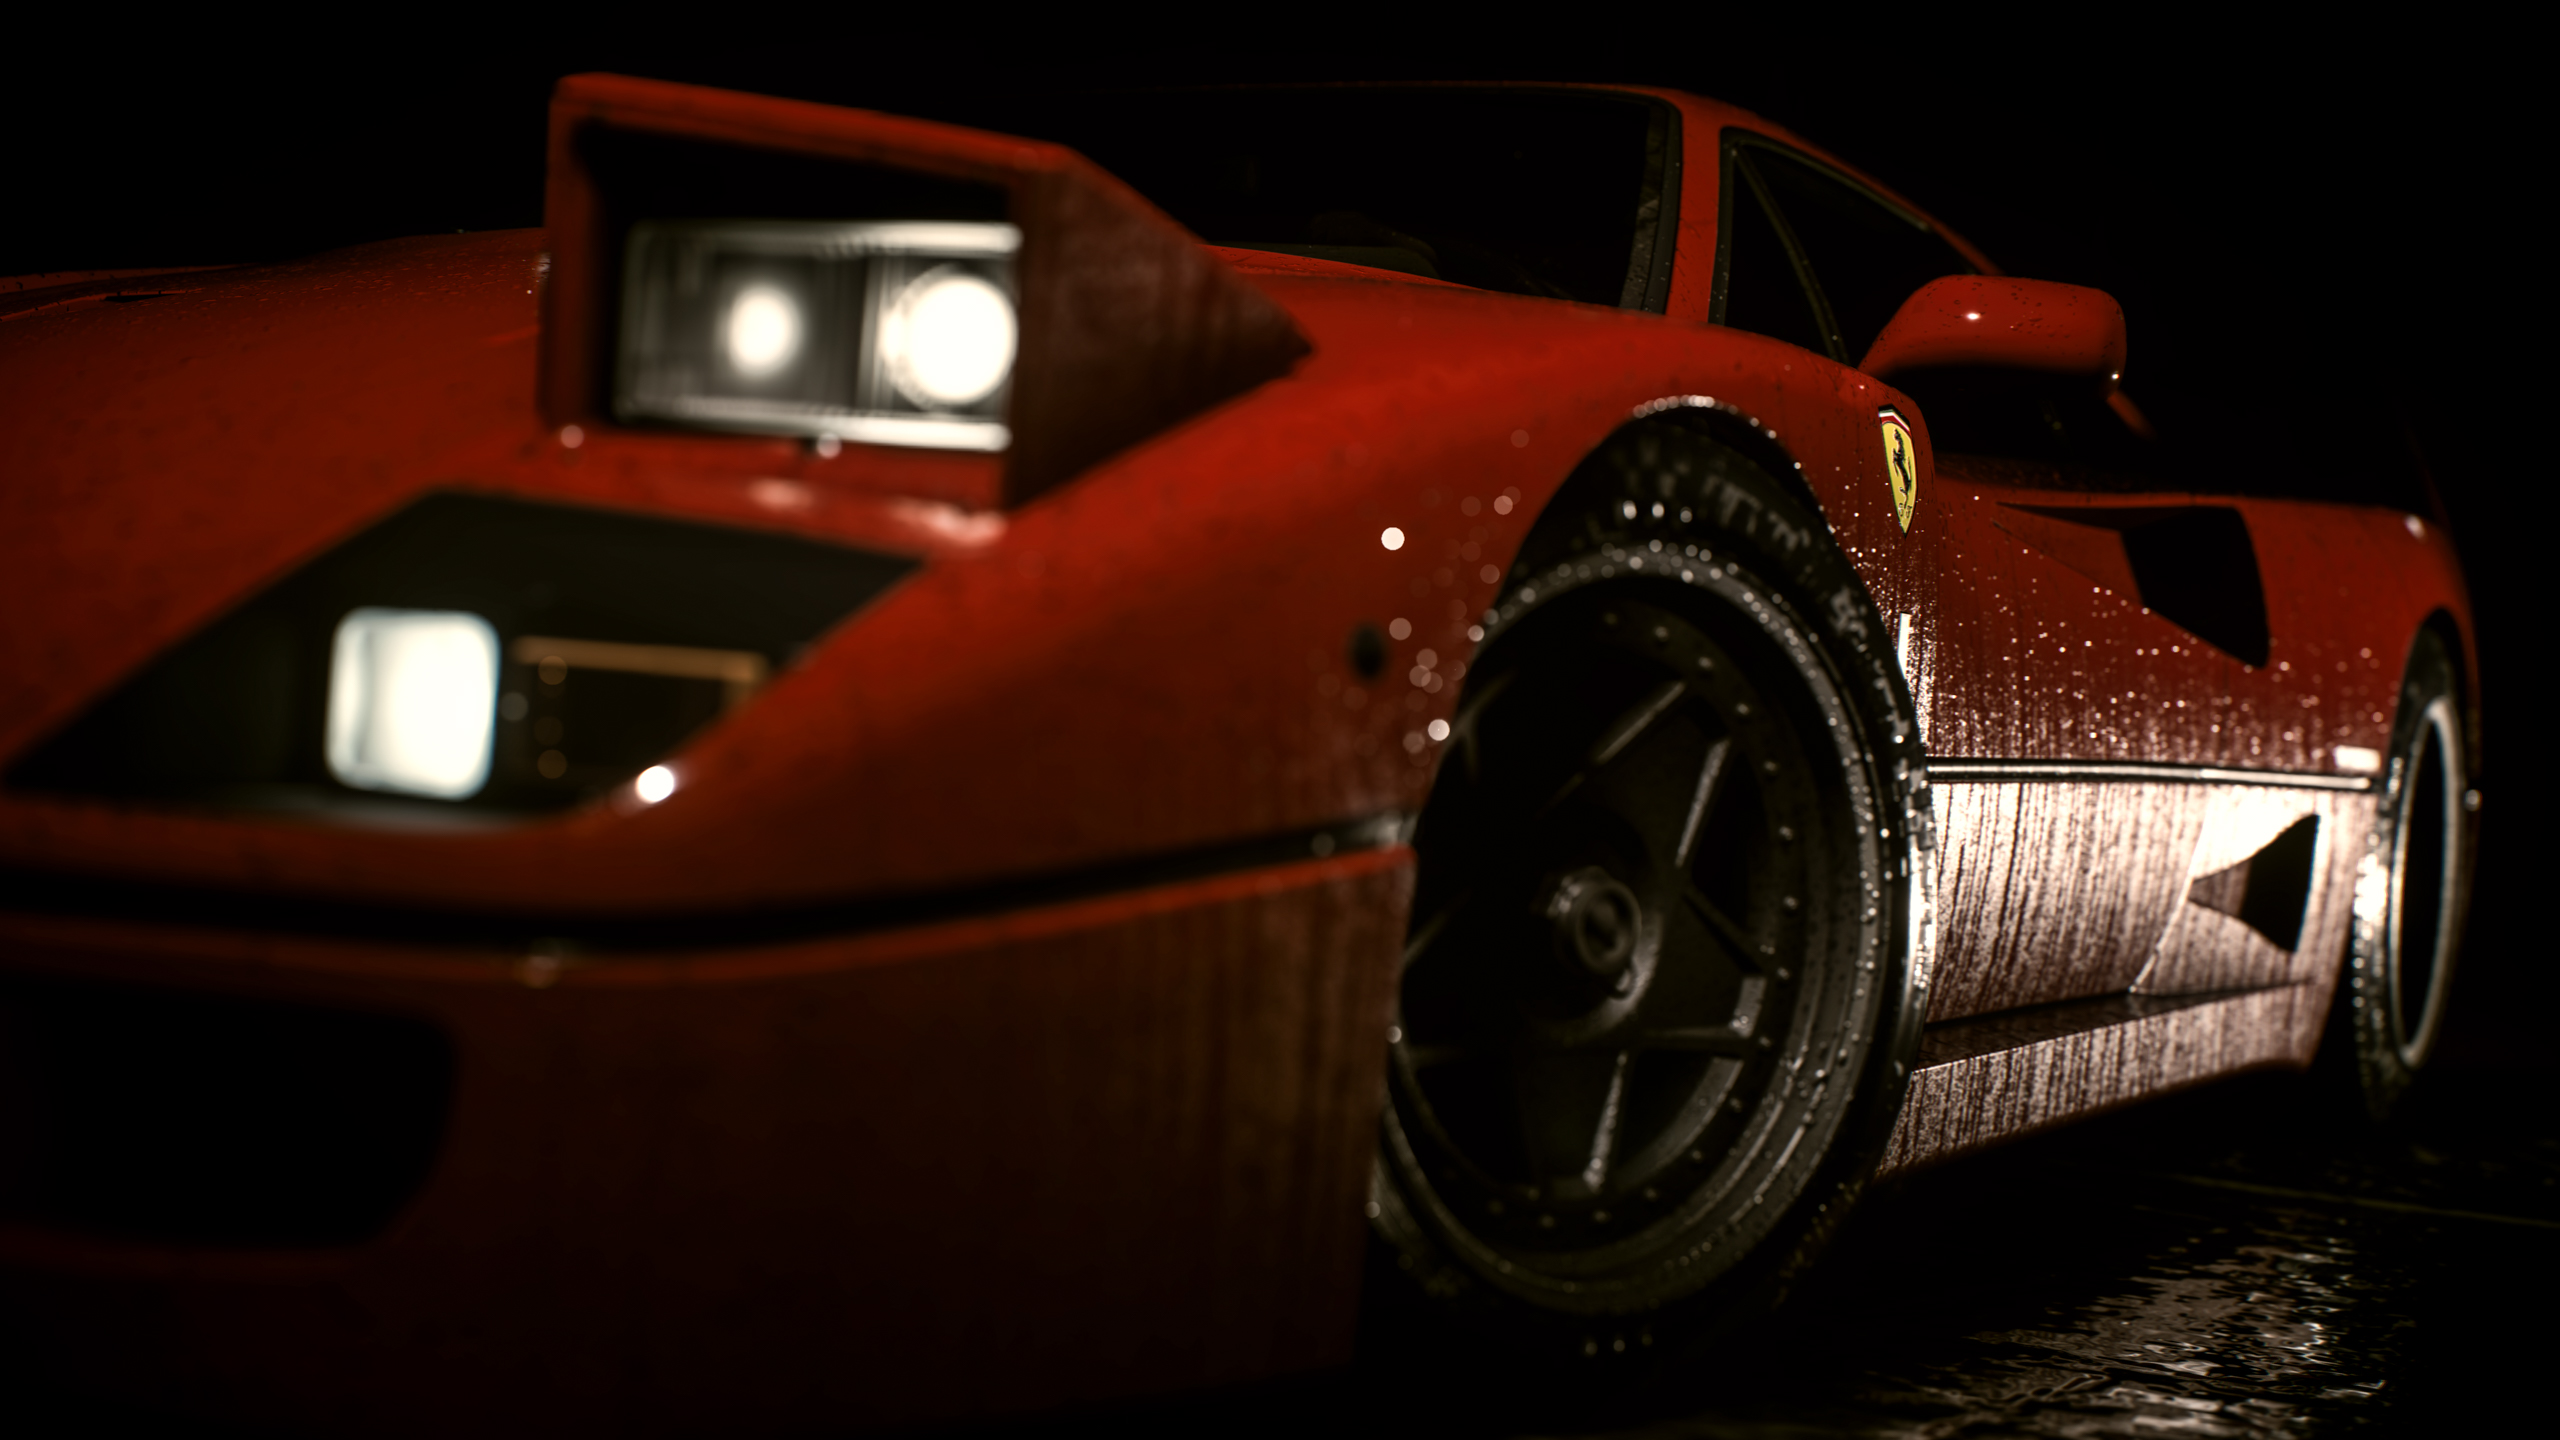 Car Ferrari Need For Speed 2015 Red Car 2560x1440